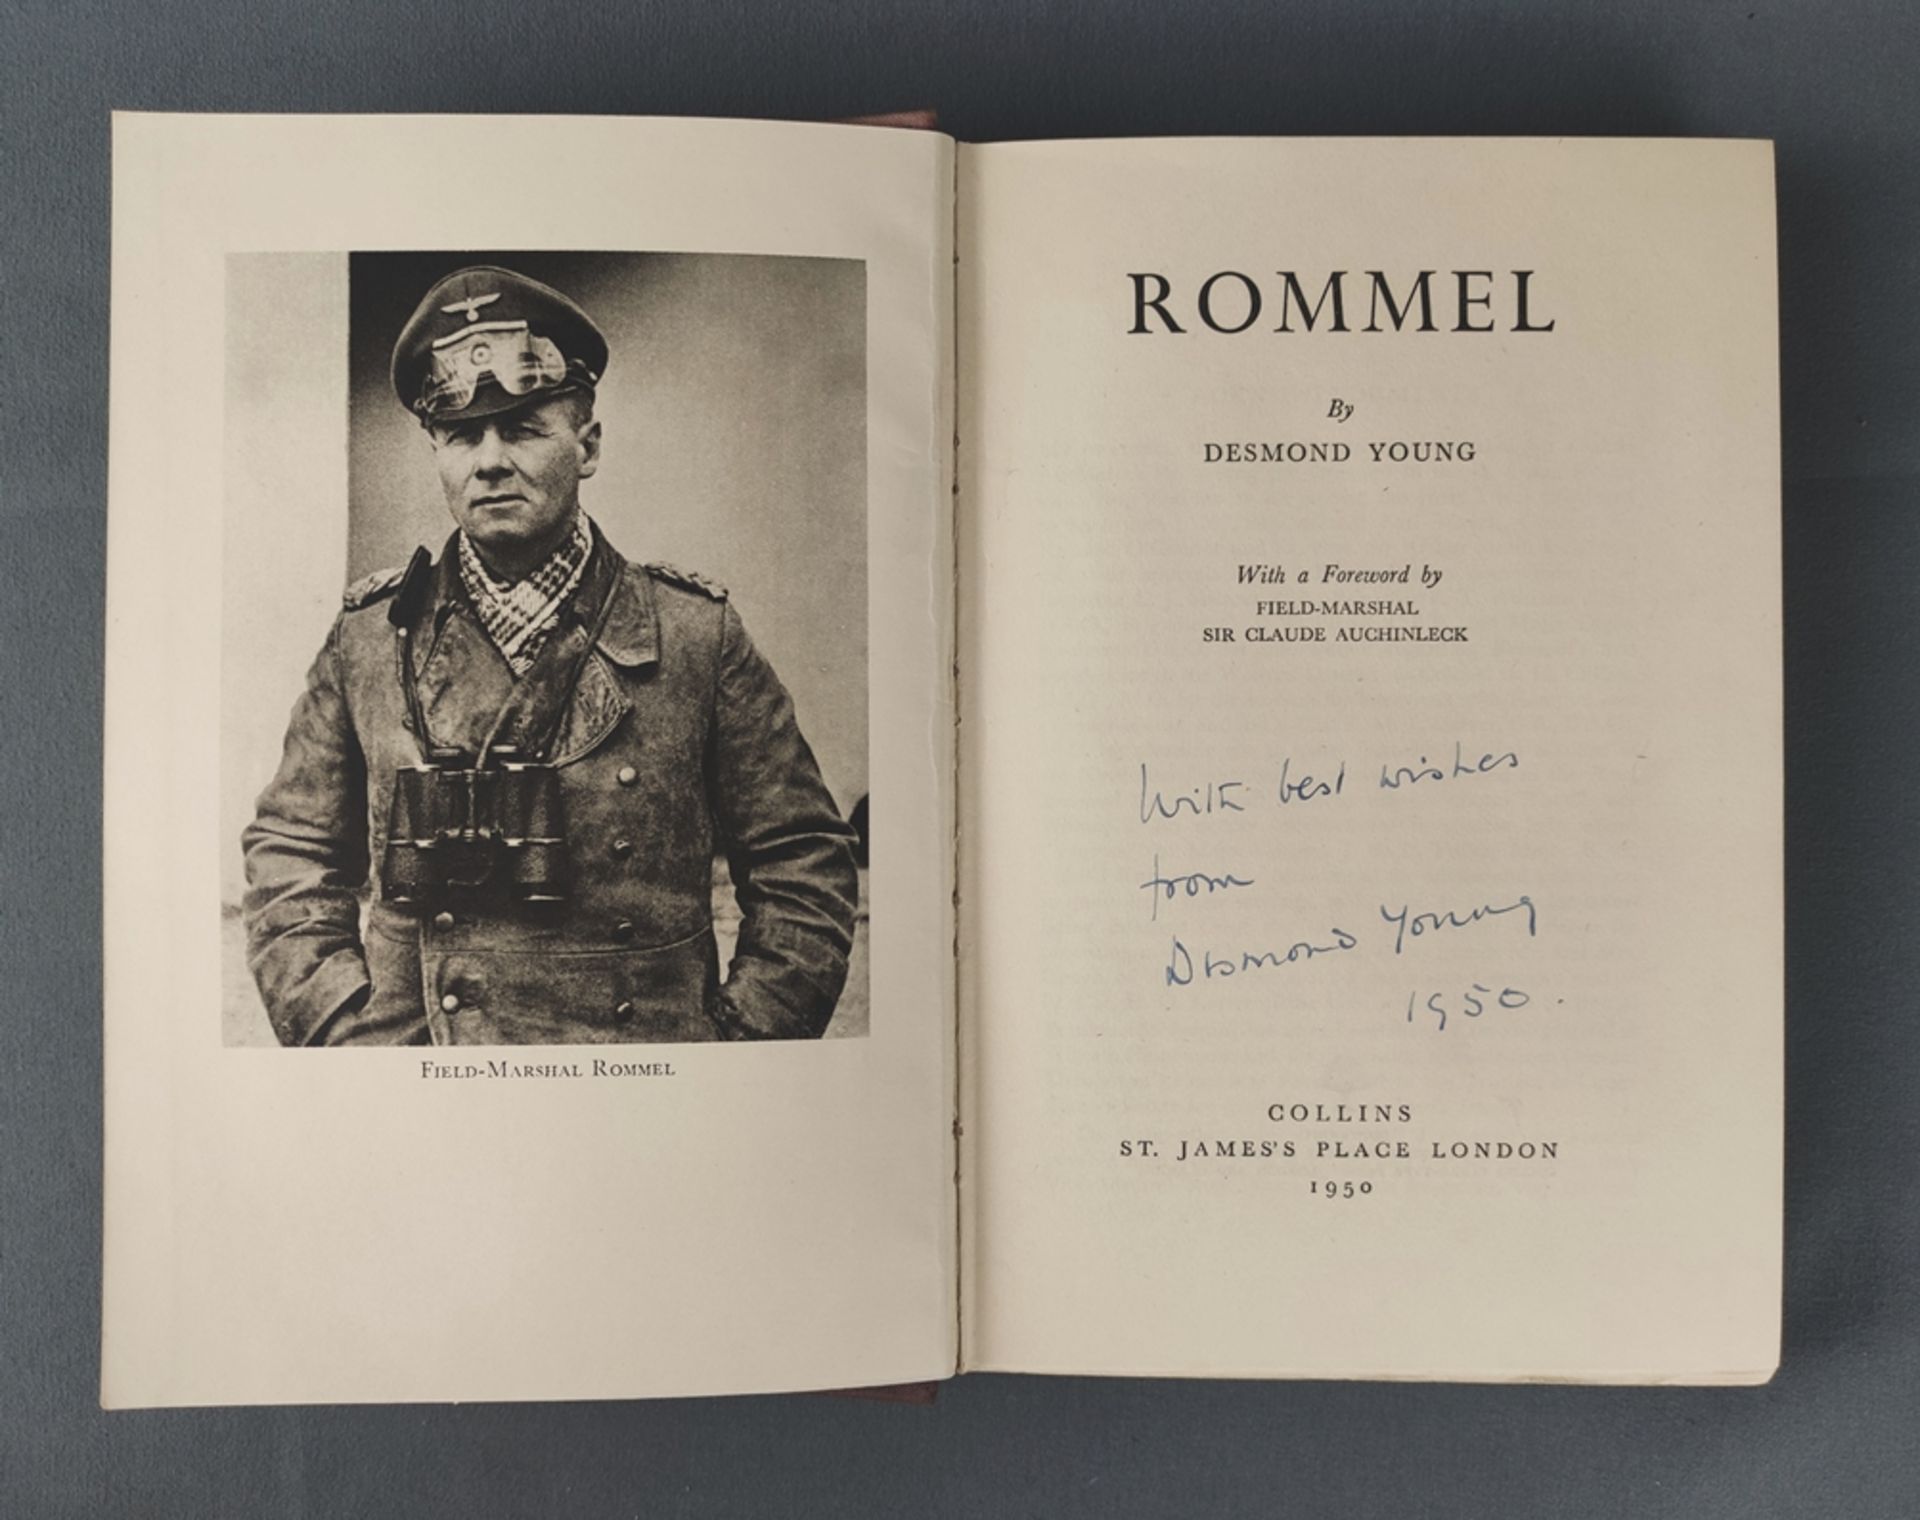 4 Bände, "Rommel", Desmond Young, Collins St. James´s Place London 1950, mit Originalwidmung des Au - Bild 2 aus 2